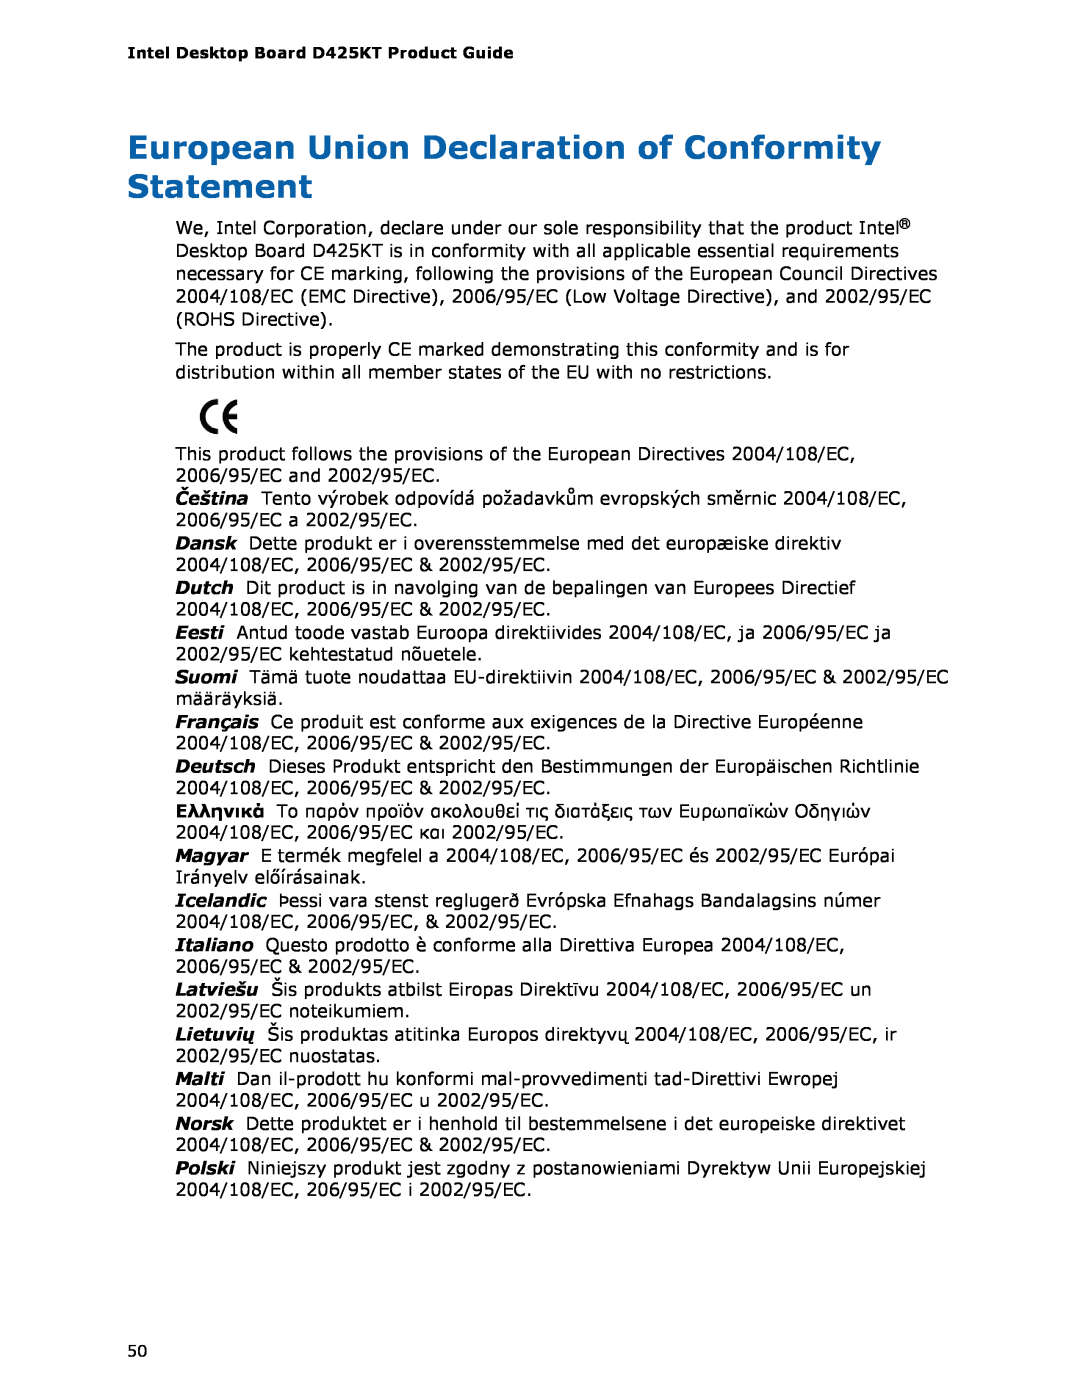 Intel D425KT manual European Union Declaration of Conformity Statement 